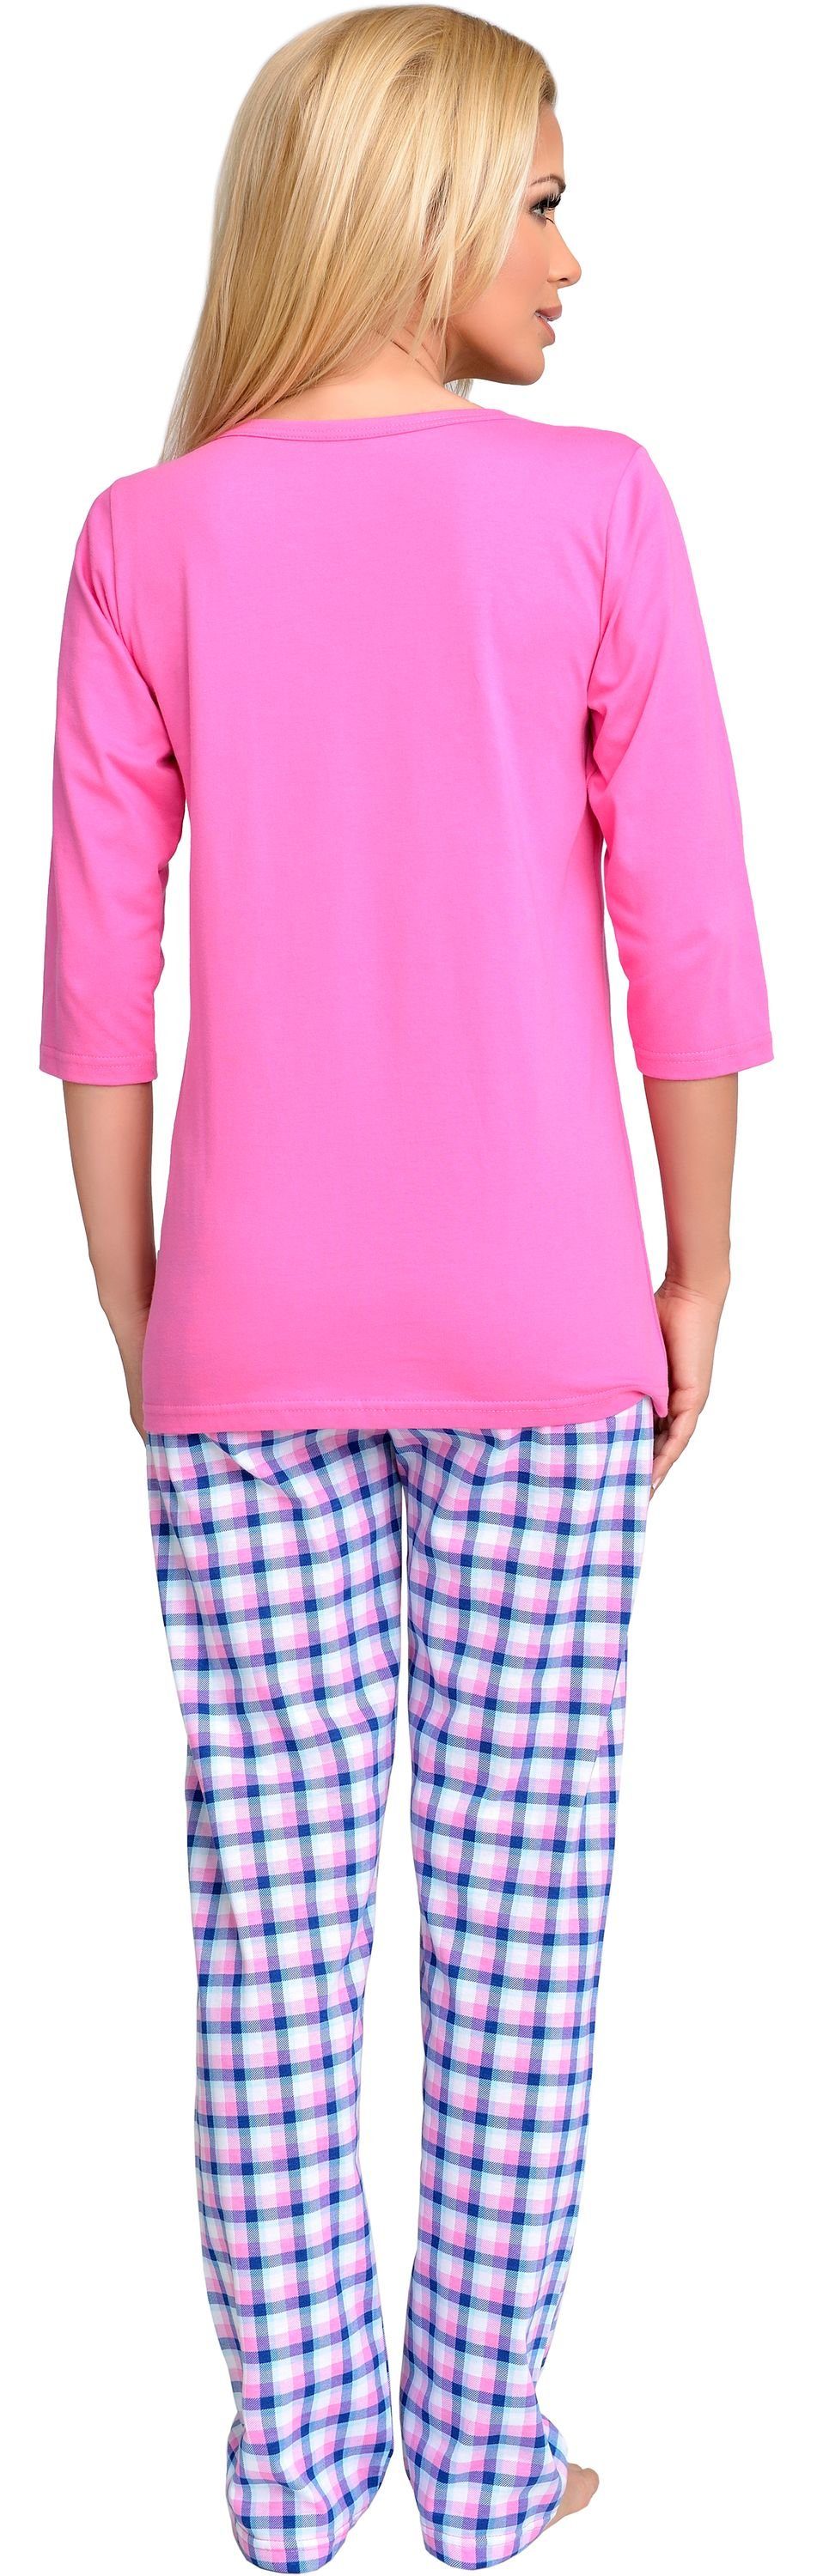 Be Mammy Umstandspyjama Damen Schlafanzug Stillpyjama Rosa-2 1N2TT2